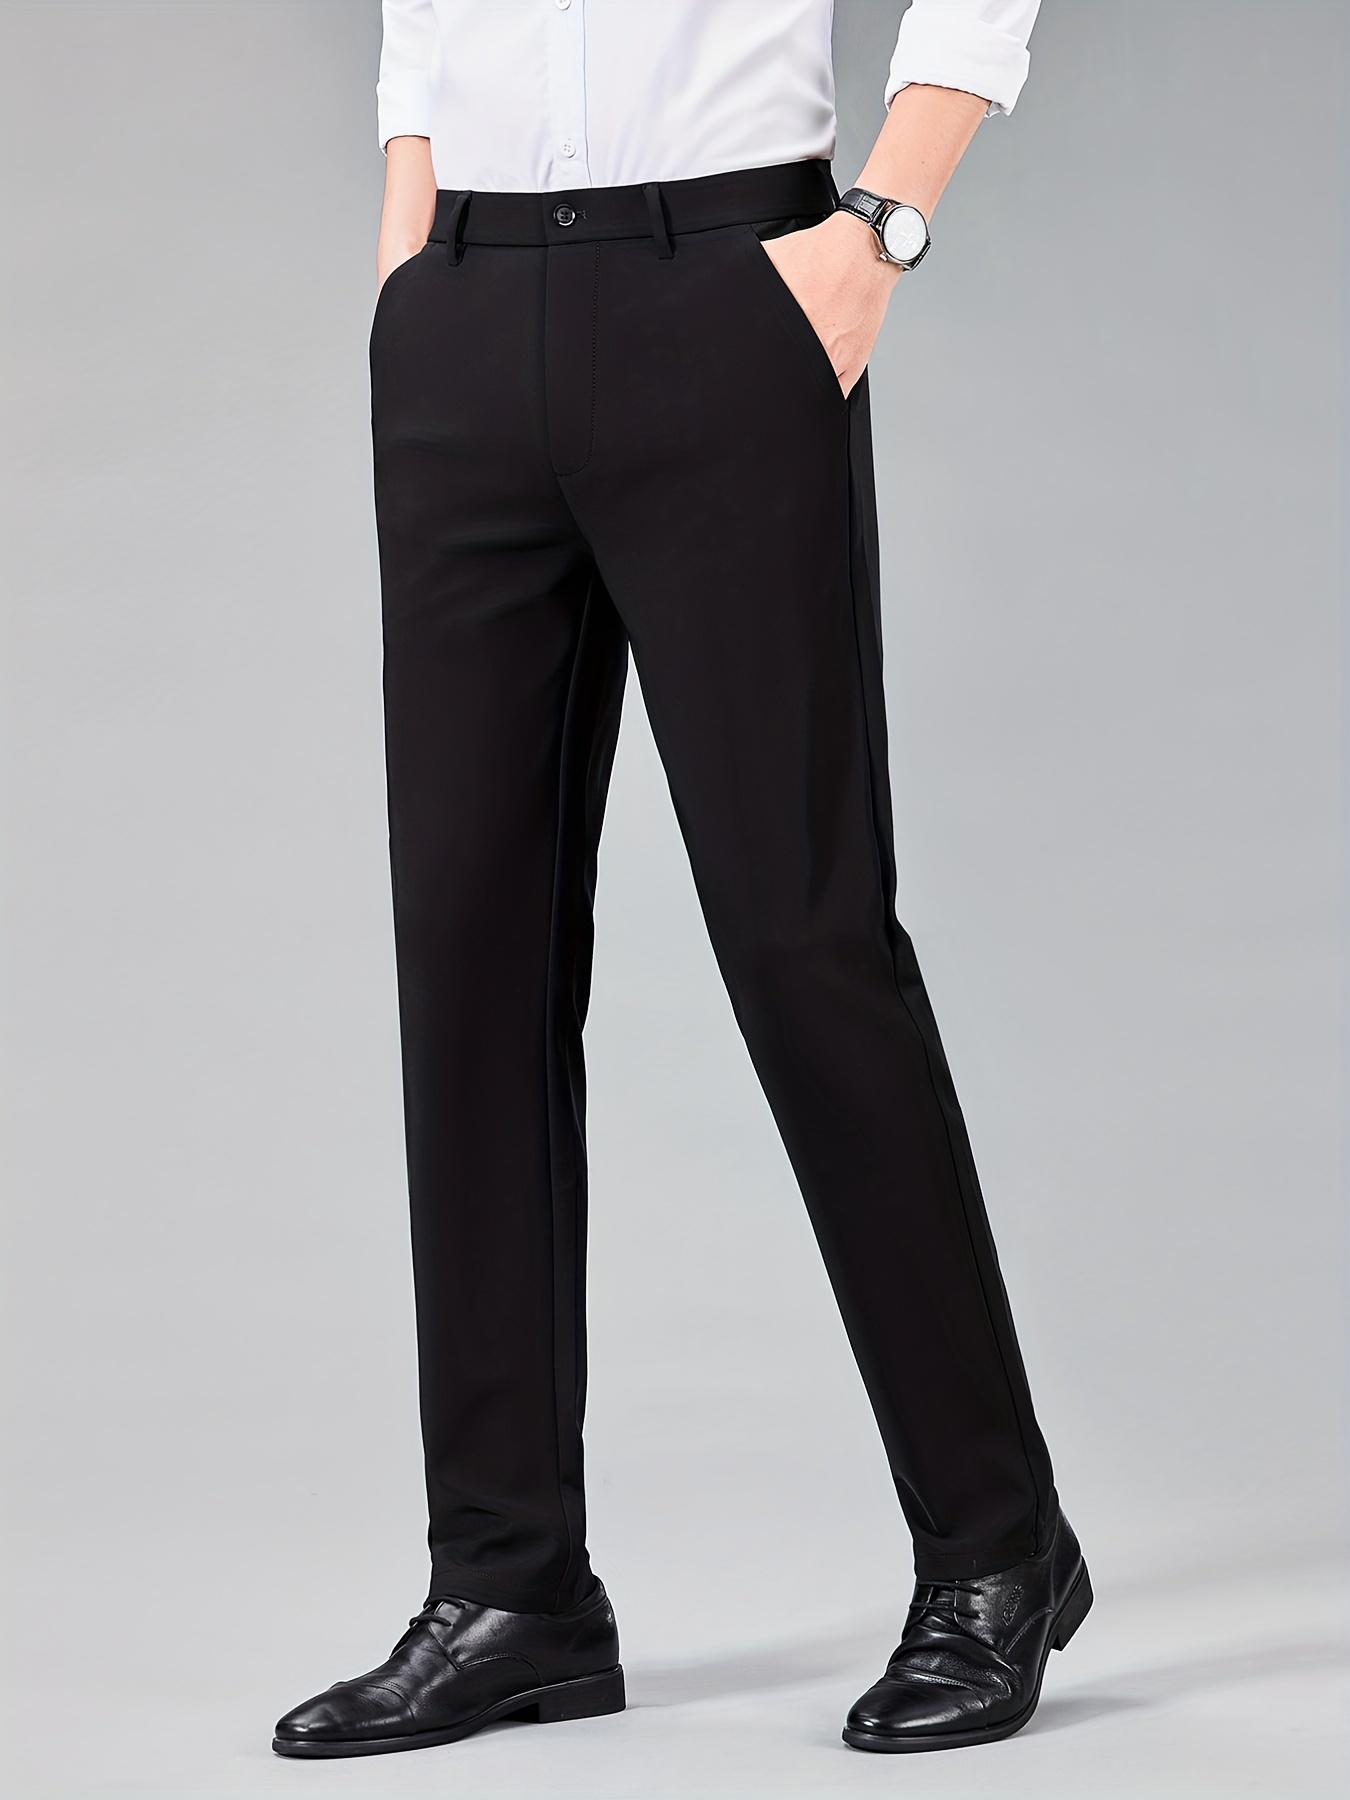 Men's British Style Business Trousers Formal Belt Design High